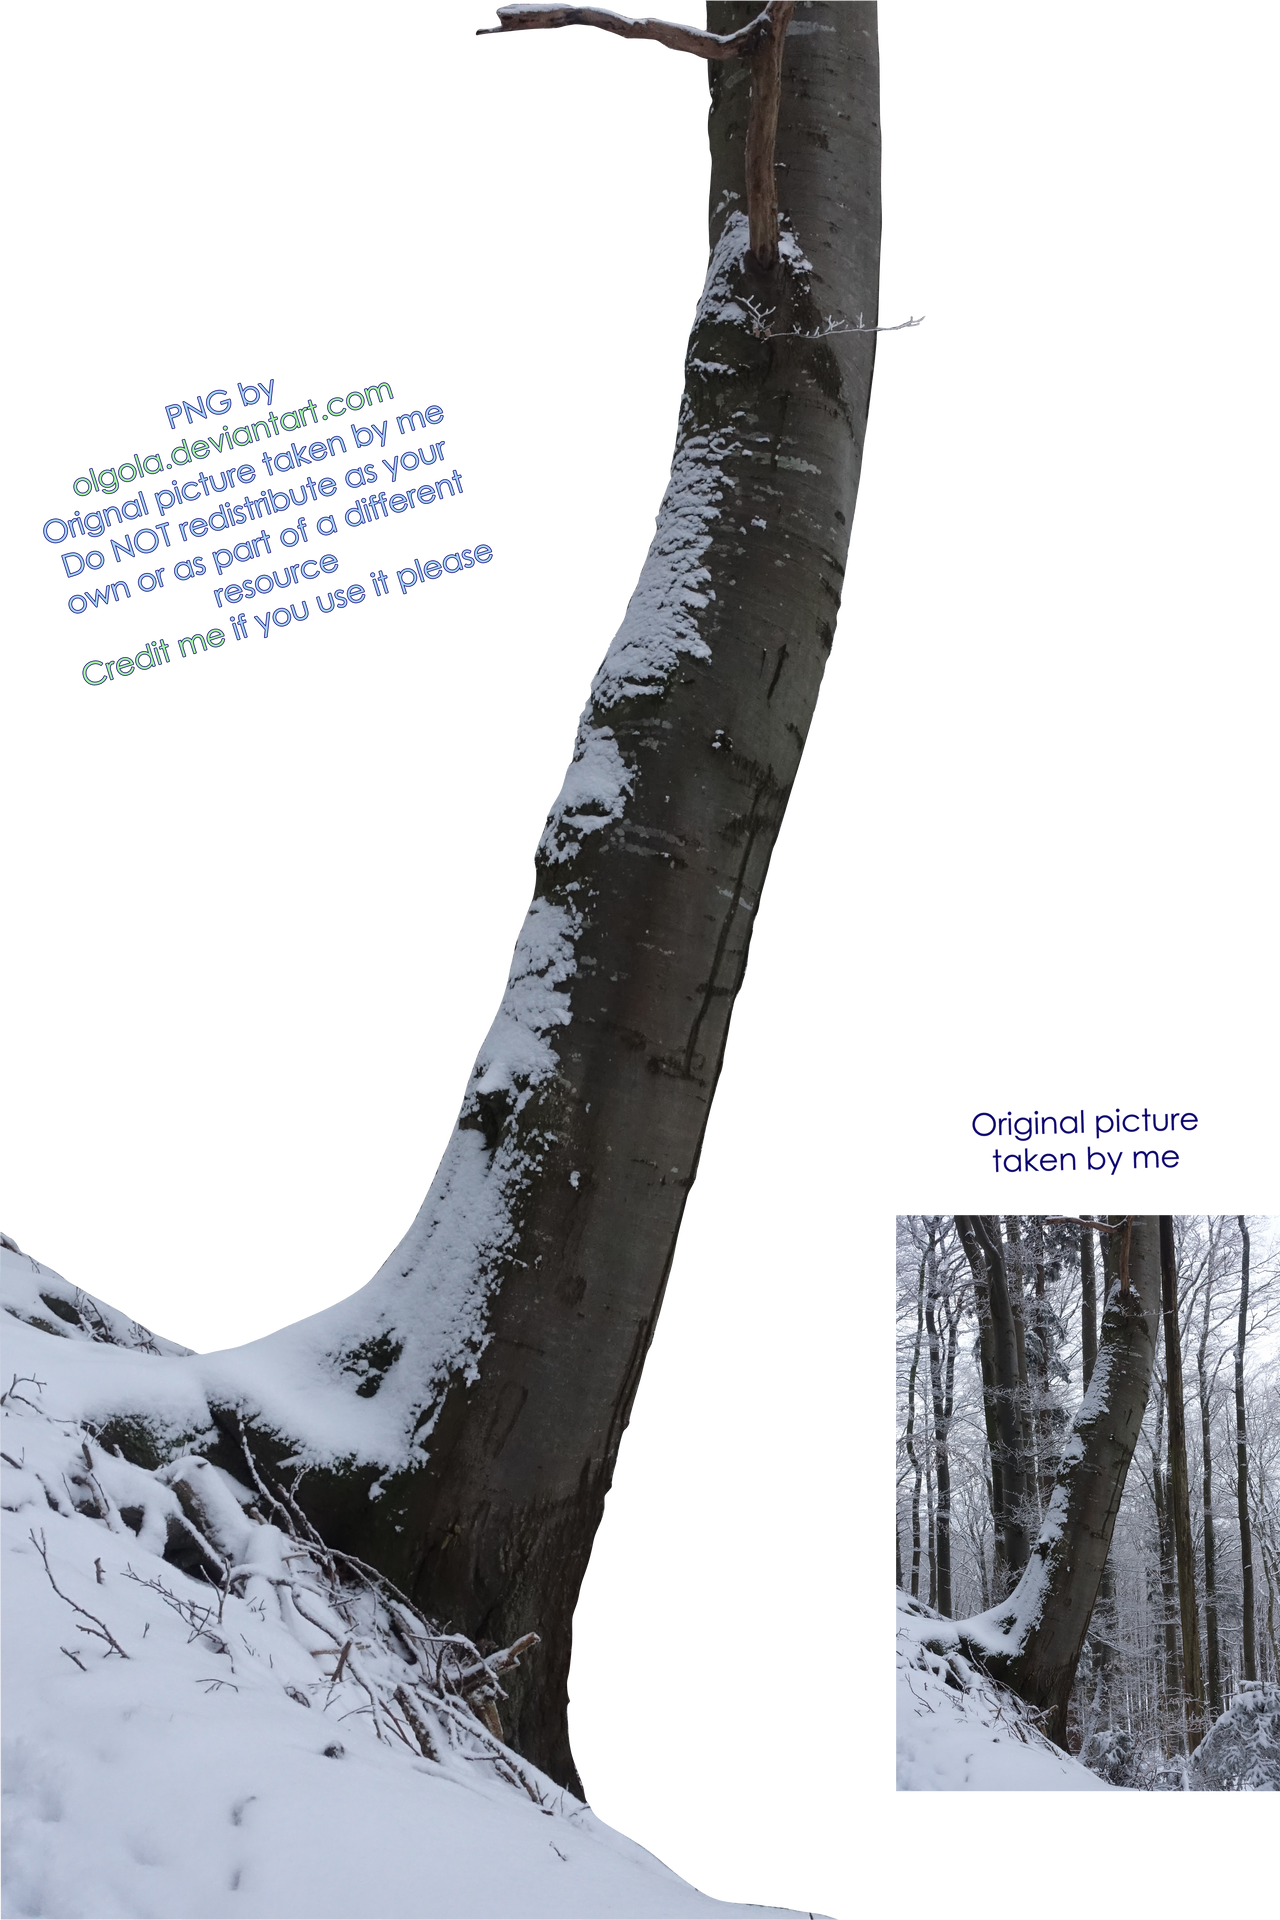 Barren Winter Tree PNG Stock Photo 0131 Orig by annamae22 on DeviantArt